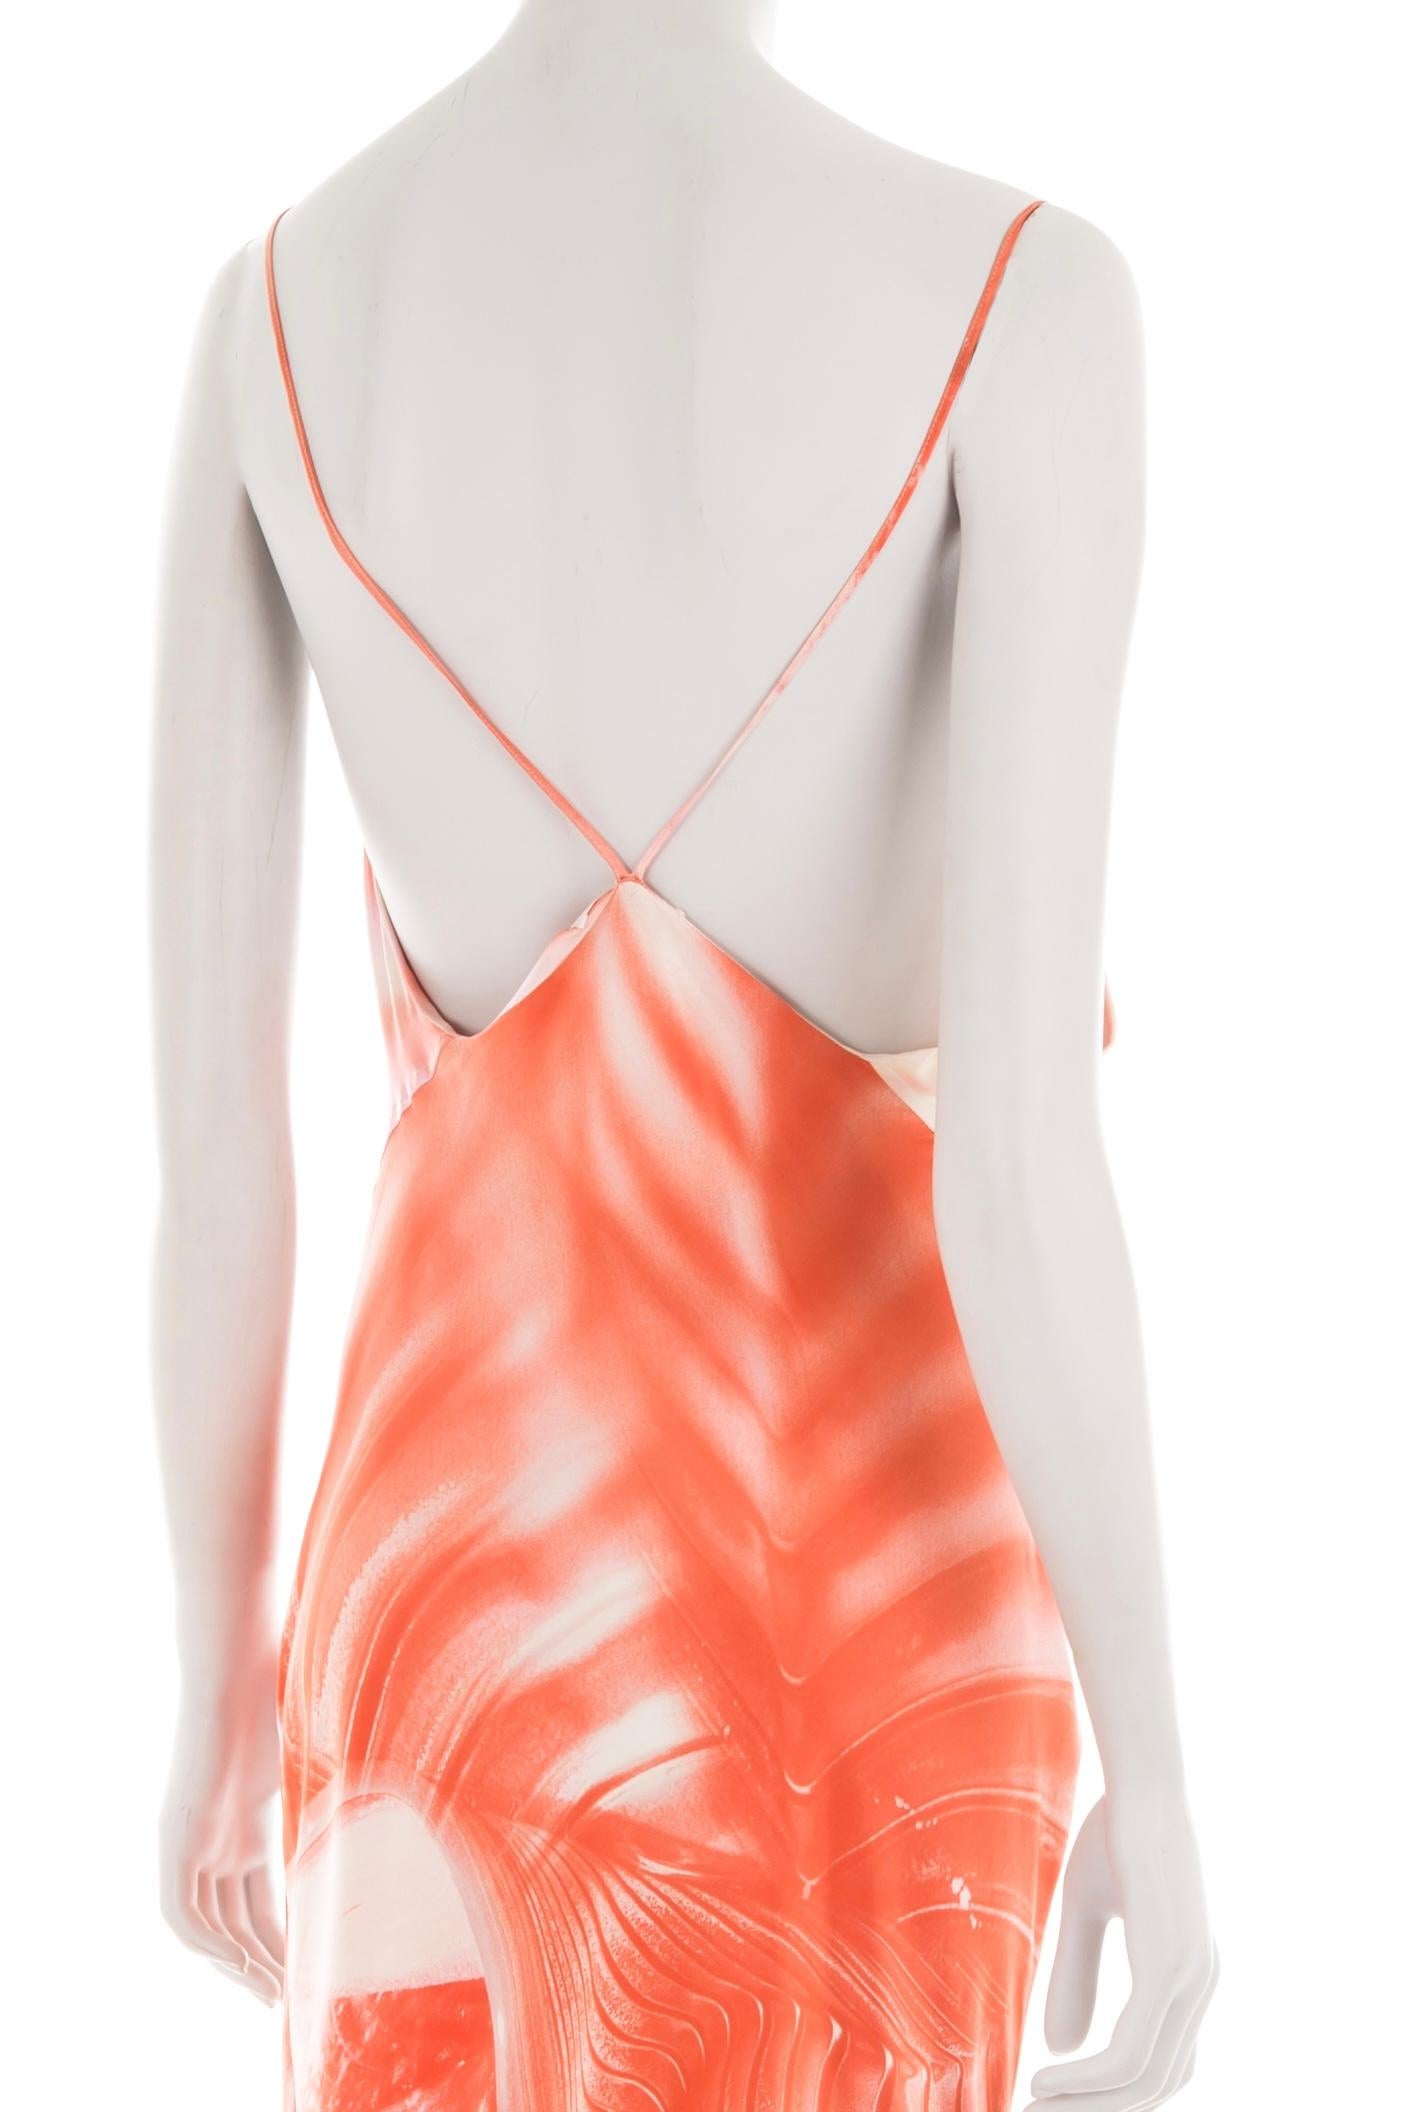 Roberto Cavalli S/S 2001 coral open-back graphic silk dress For Sale 2